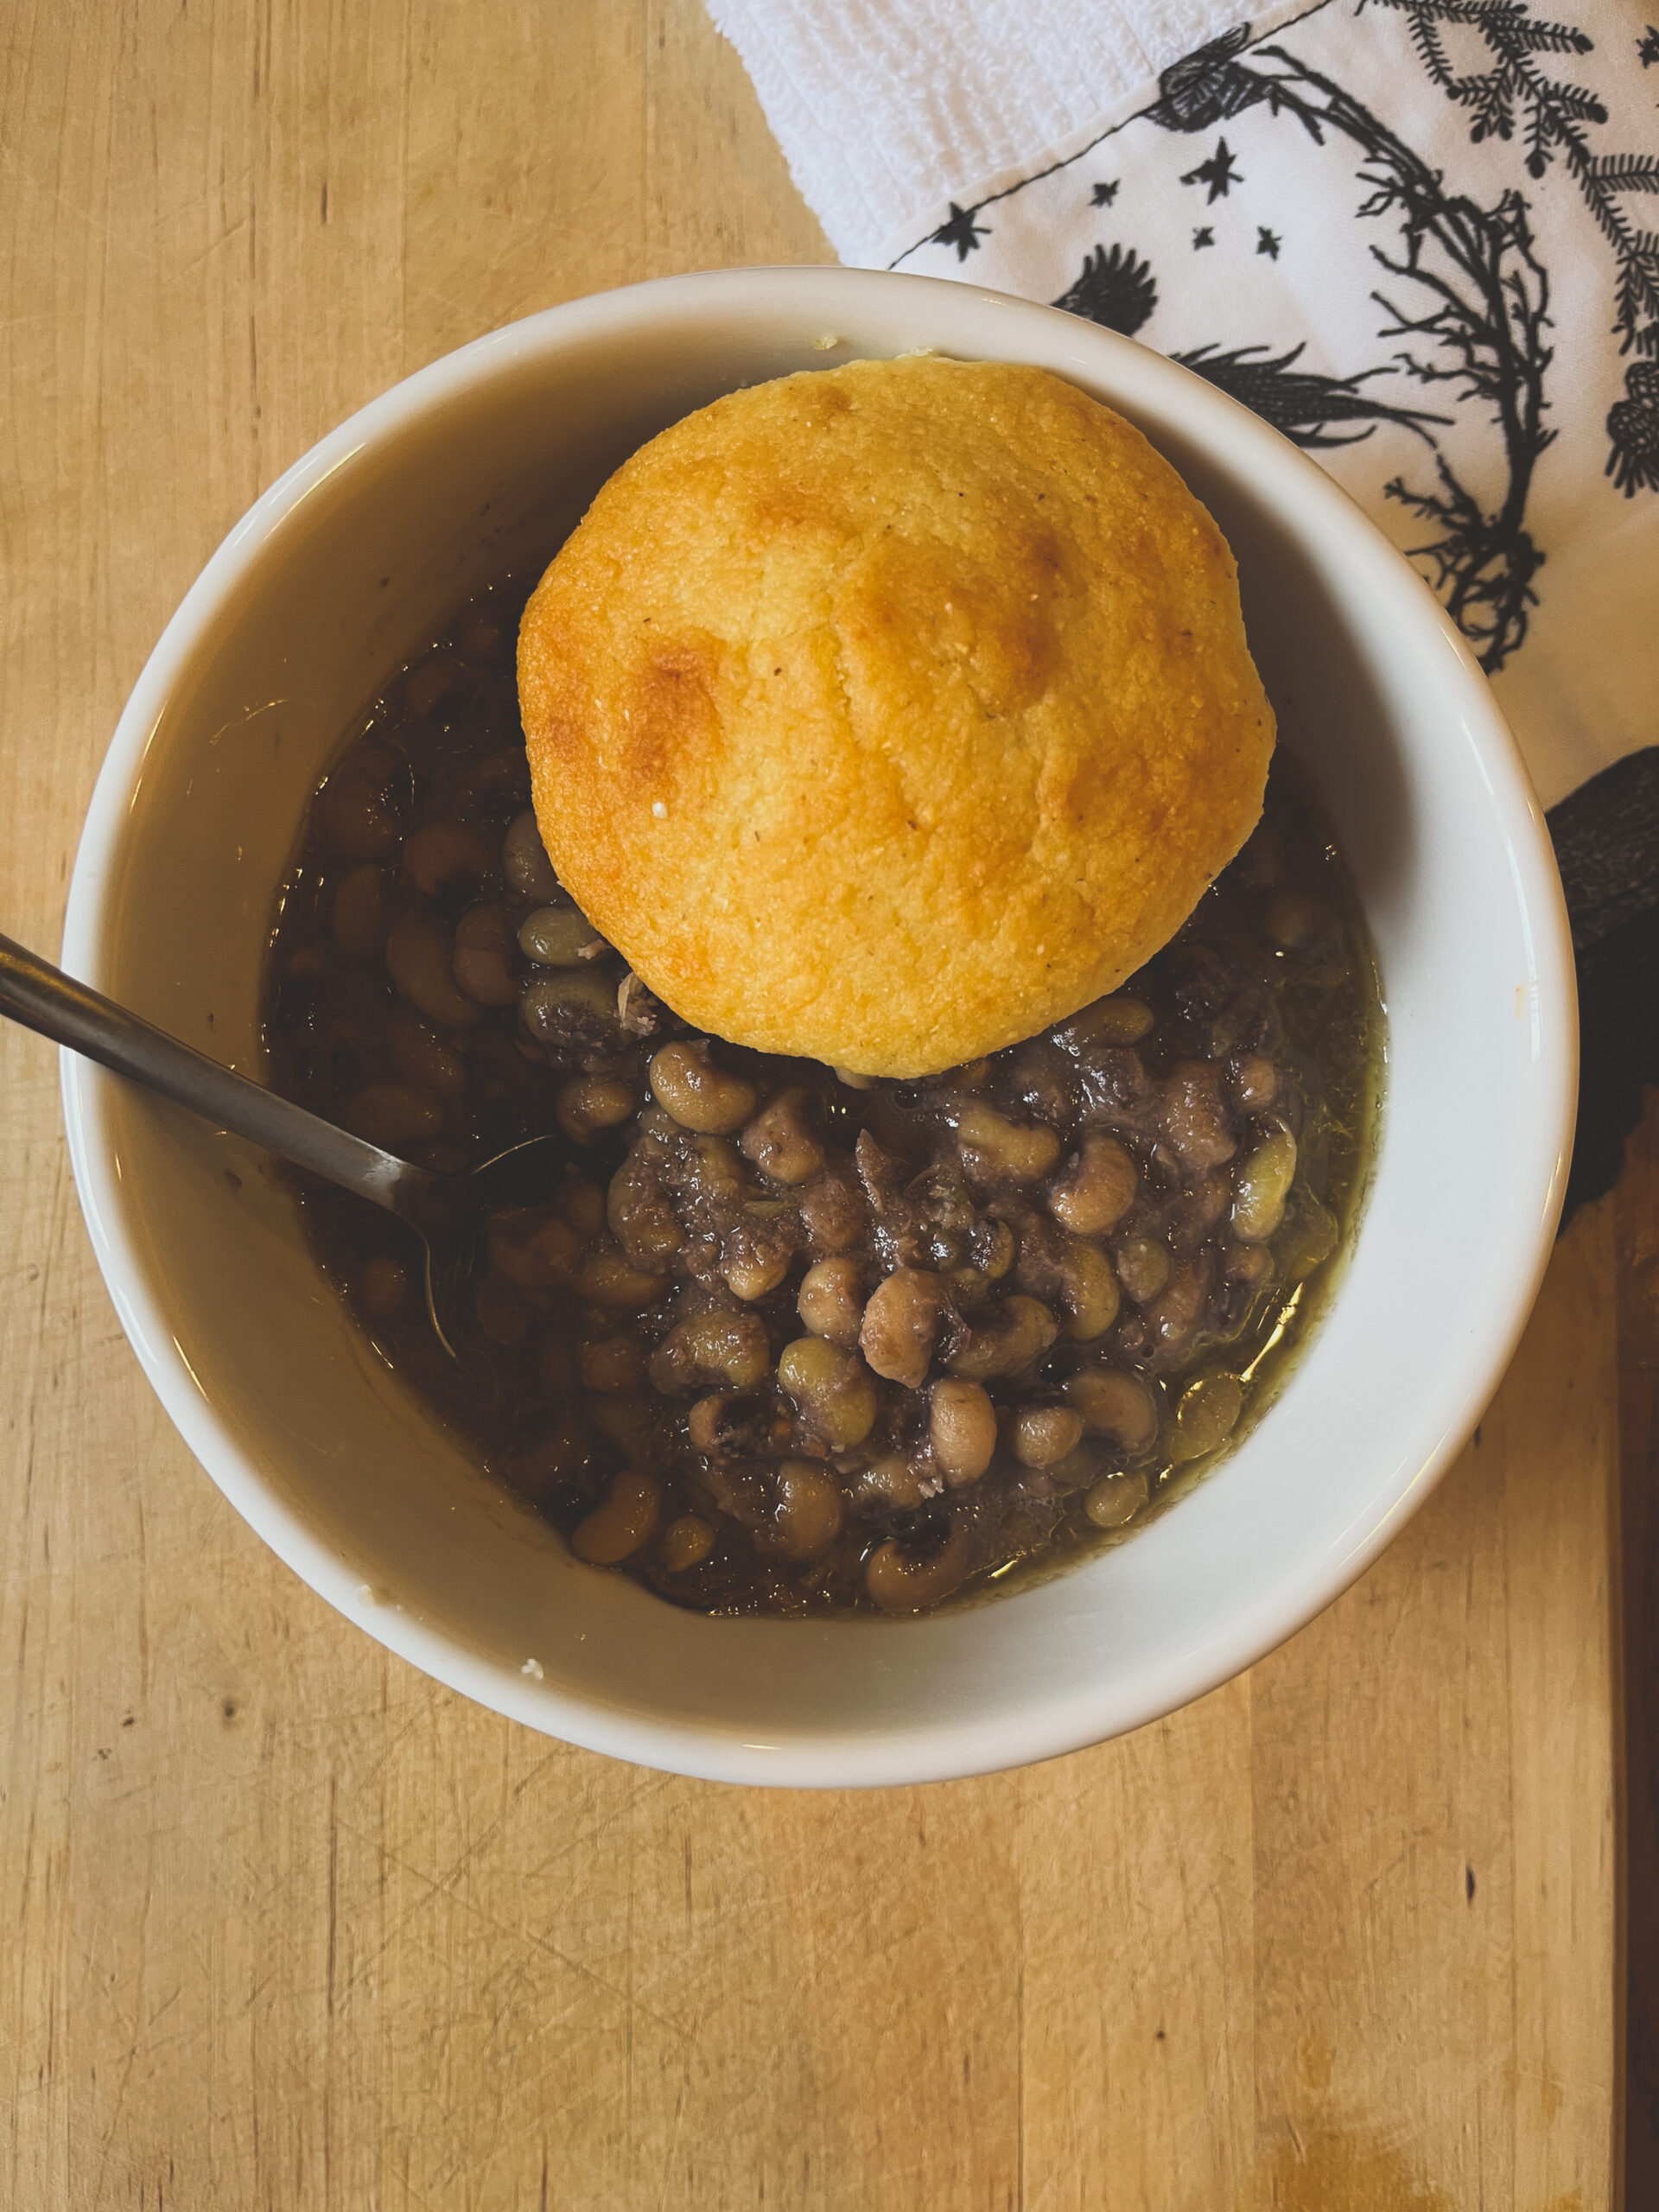 Purple Hull Peas: Growing, Preparing, and Preserving this Southern Favorite